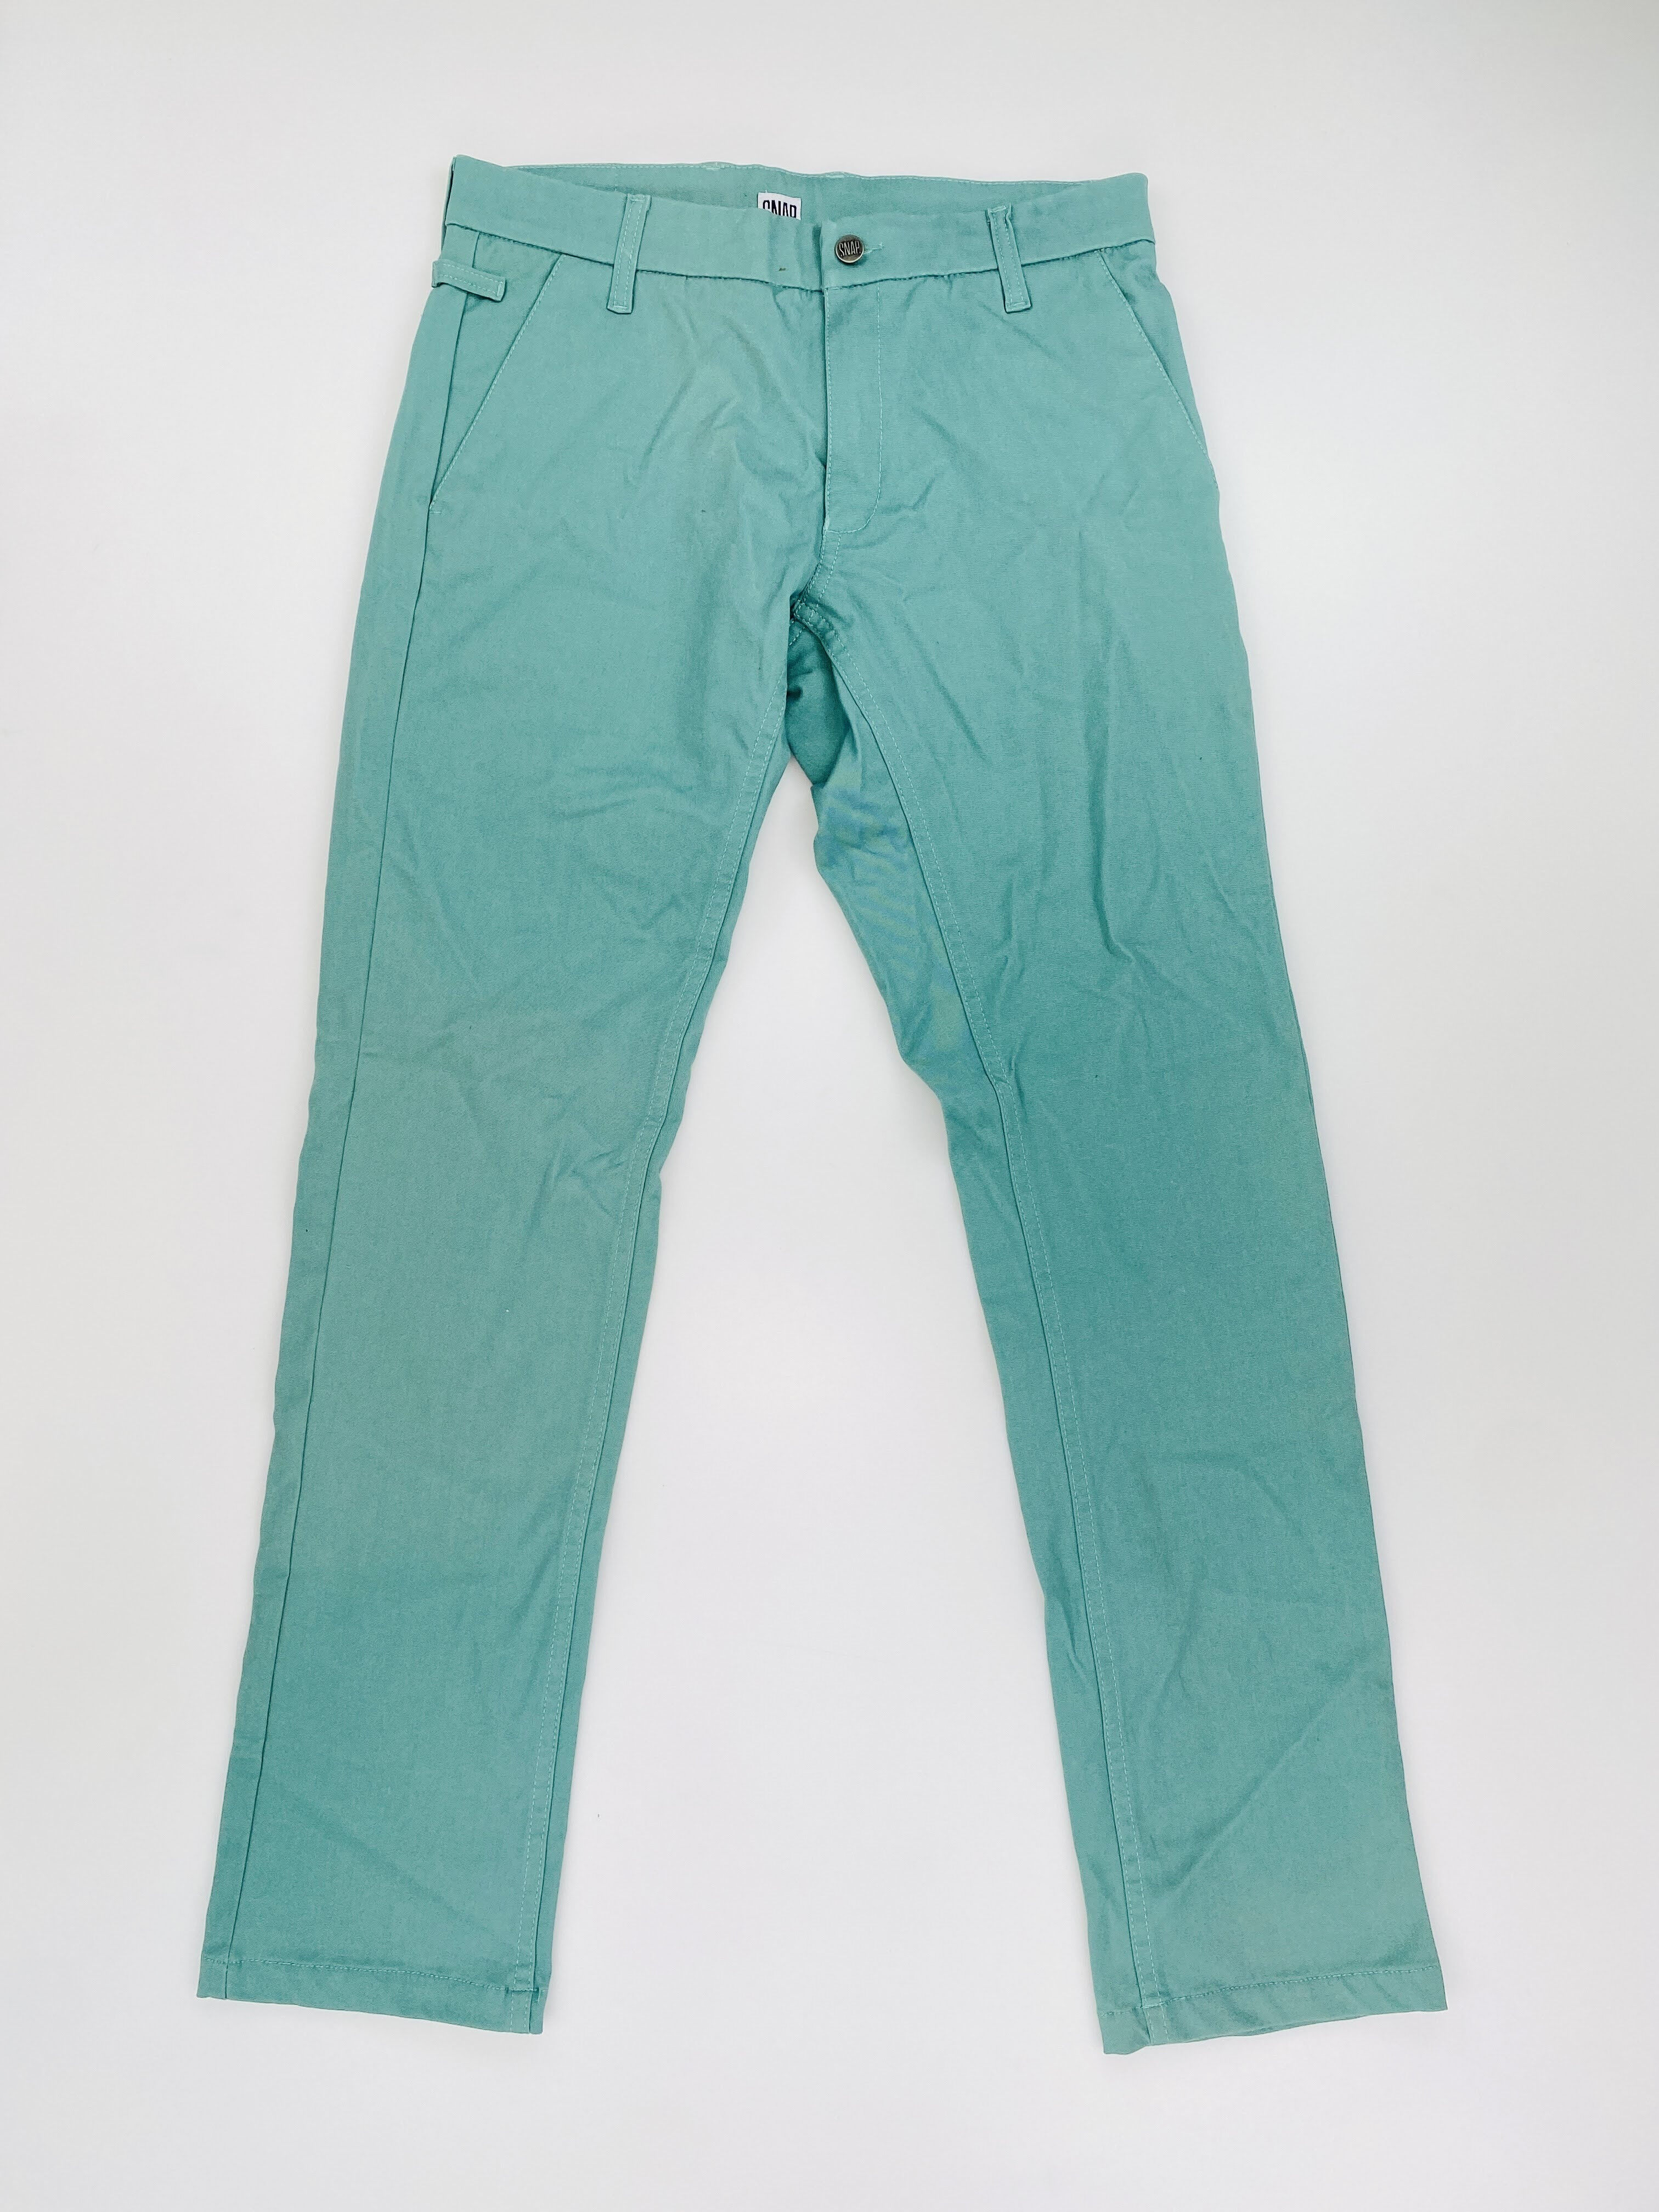 Snap Chino - Segunda Mano Pantalones - Hombre - Verde - S | Hardloop